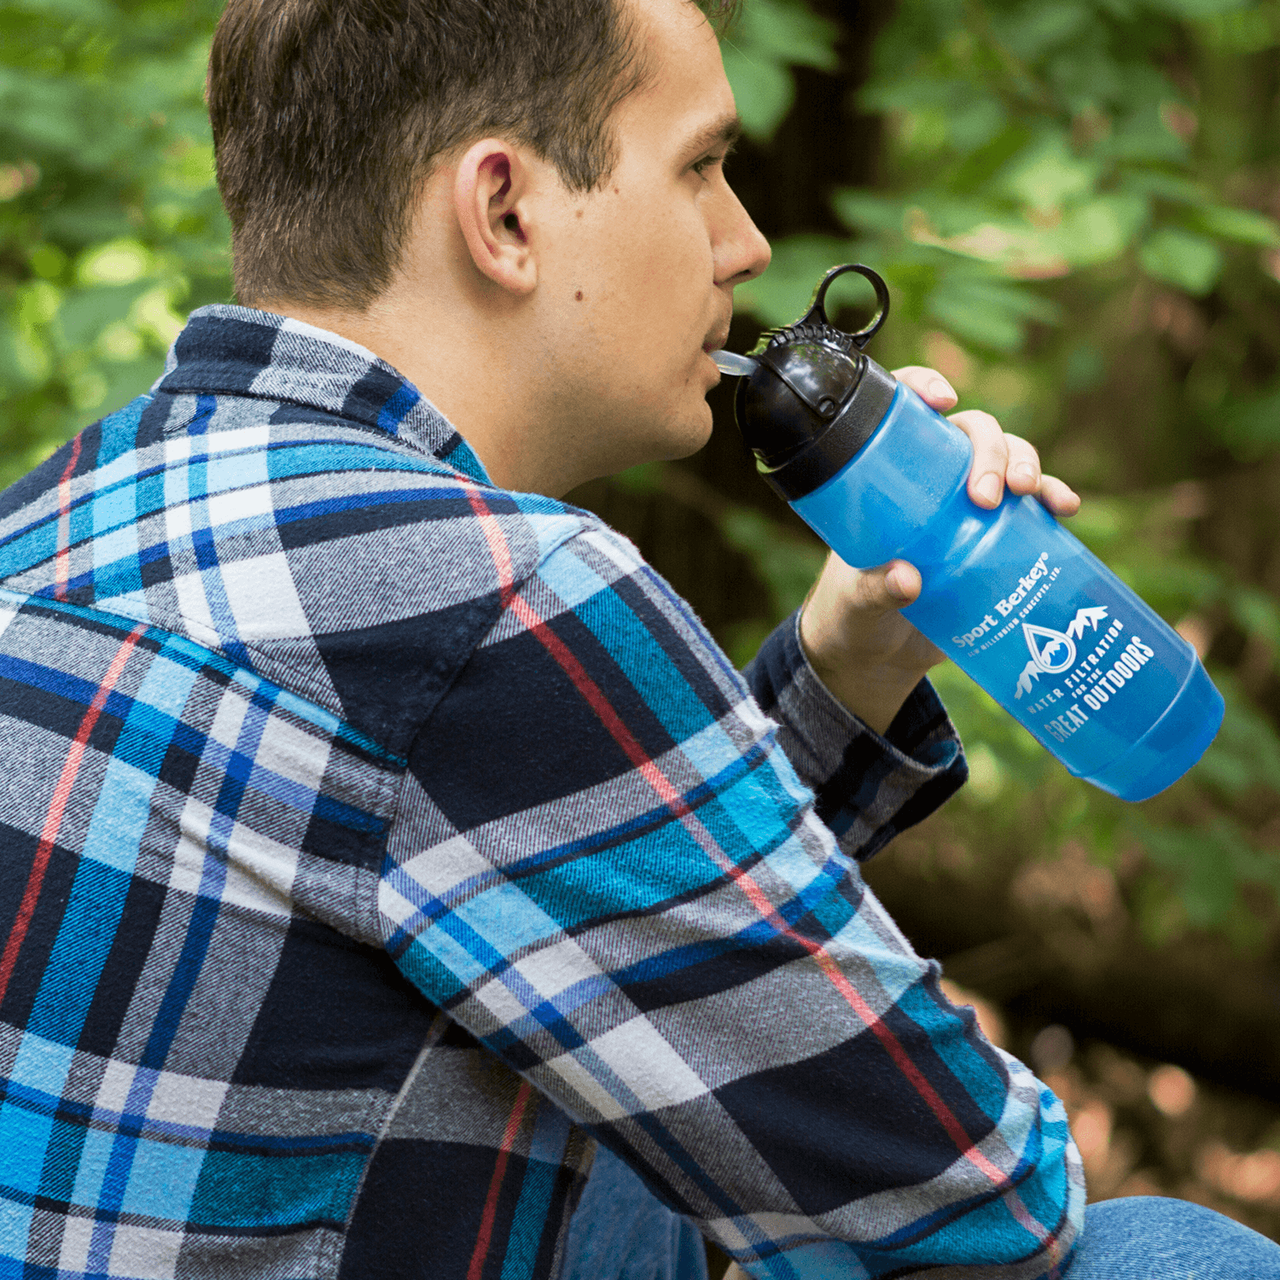 Sport Berkey Filtered Water Bottle BPA Free